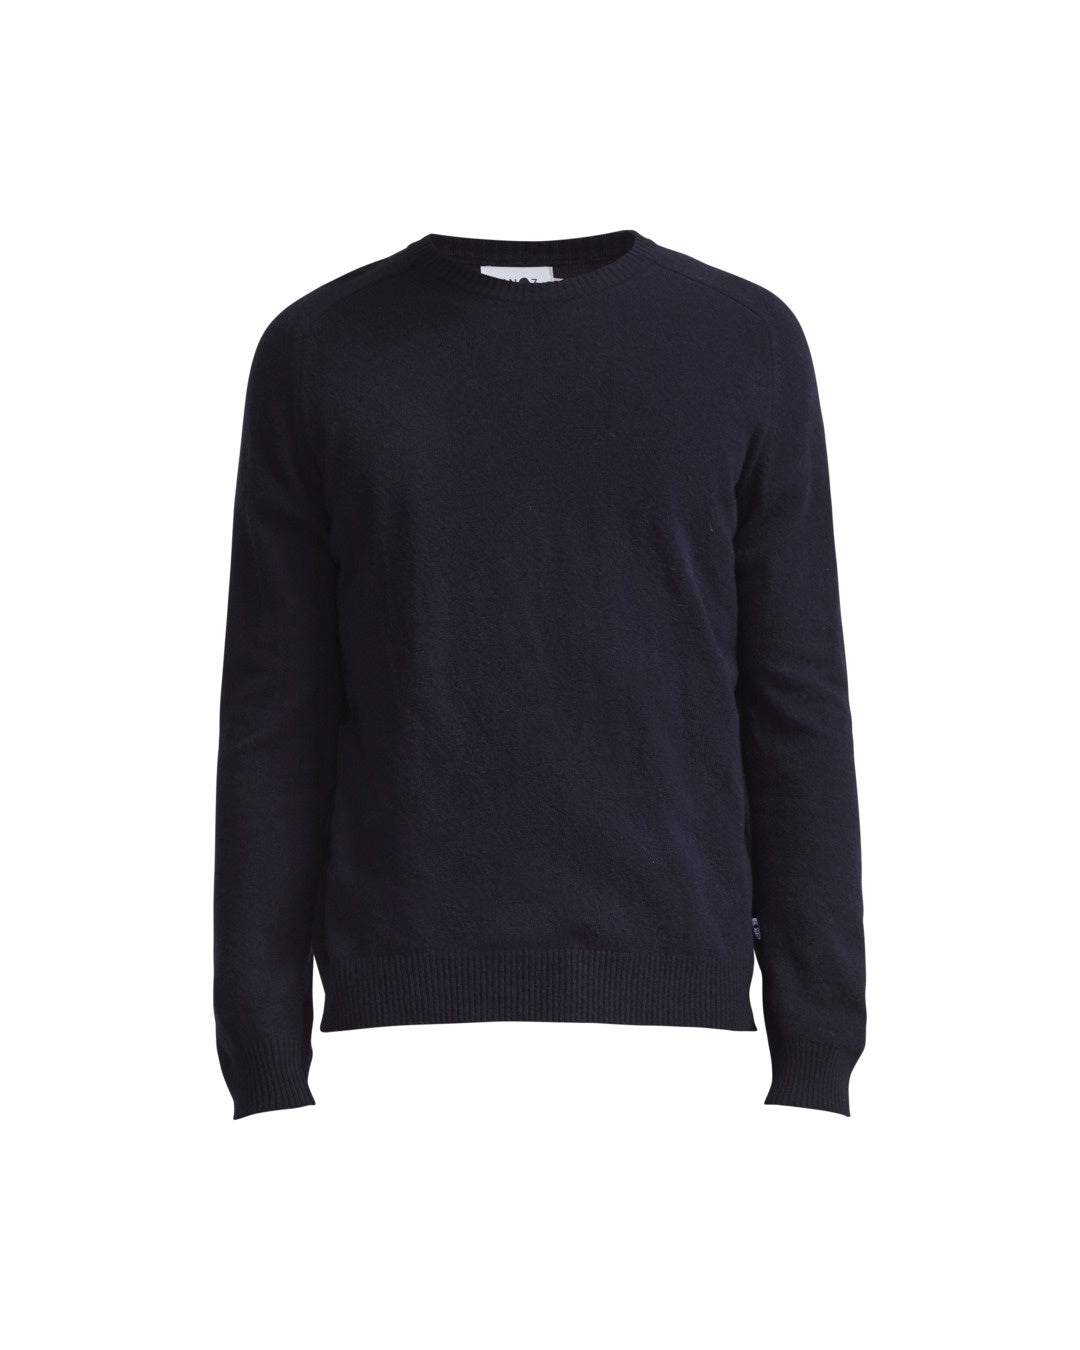 NN07 / Edward 6333 Lambswool Sweater / Navy Blue